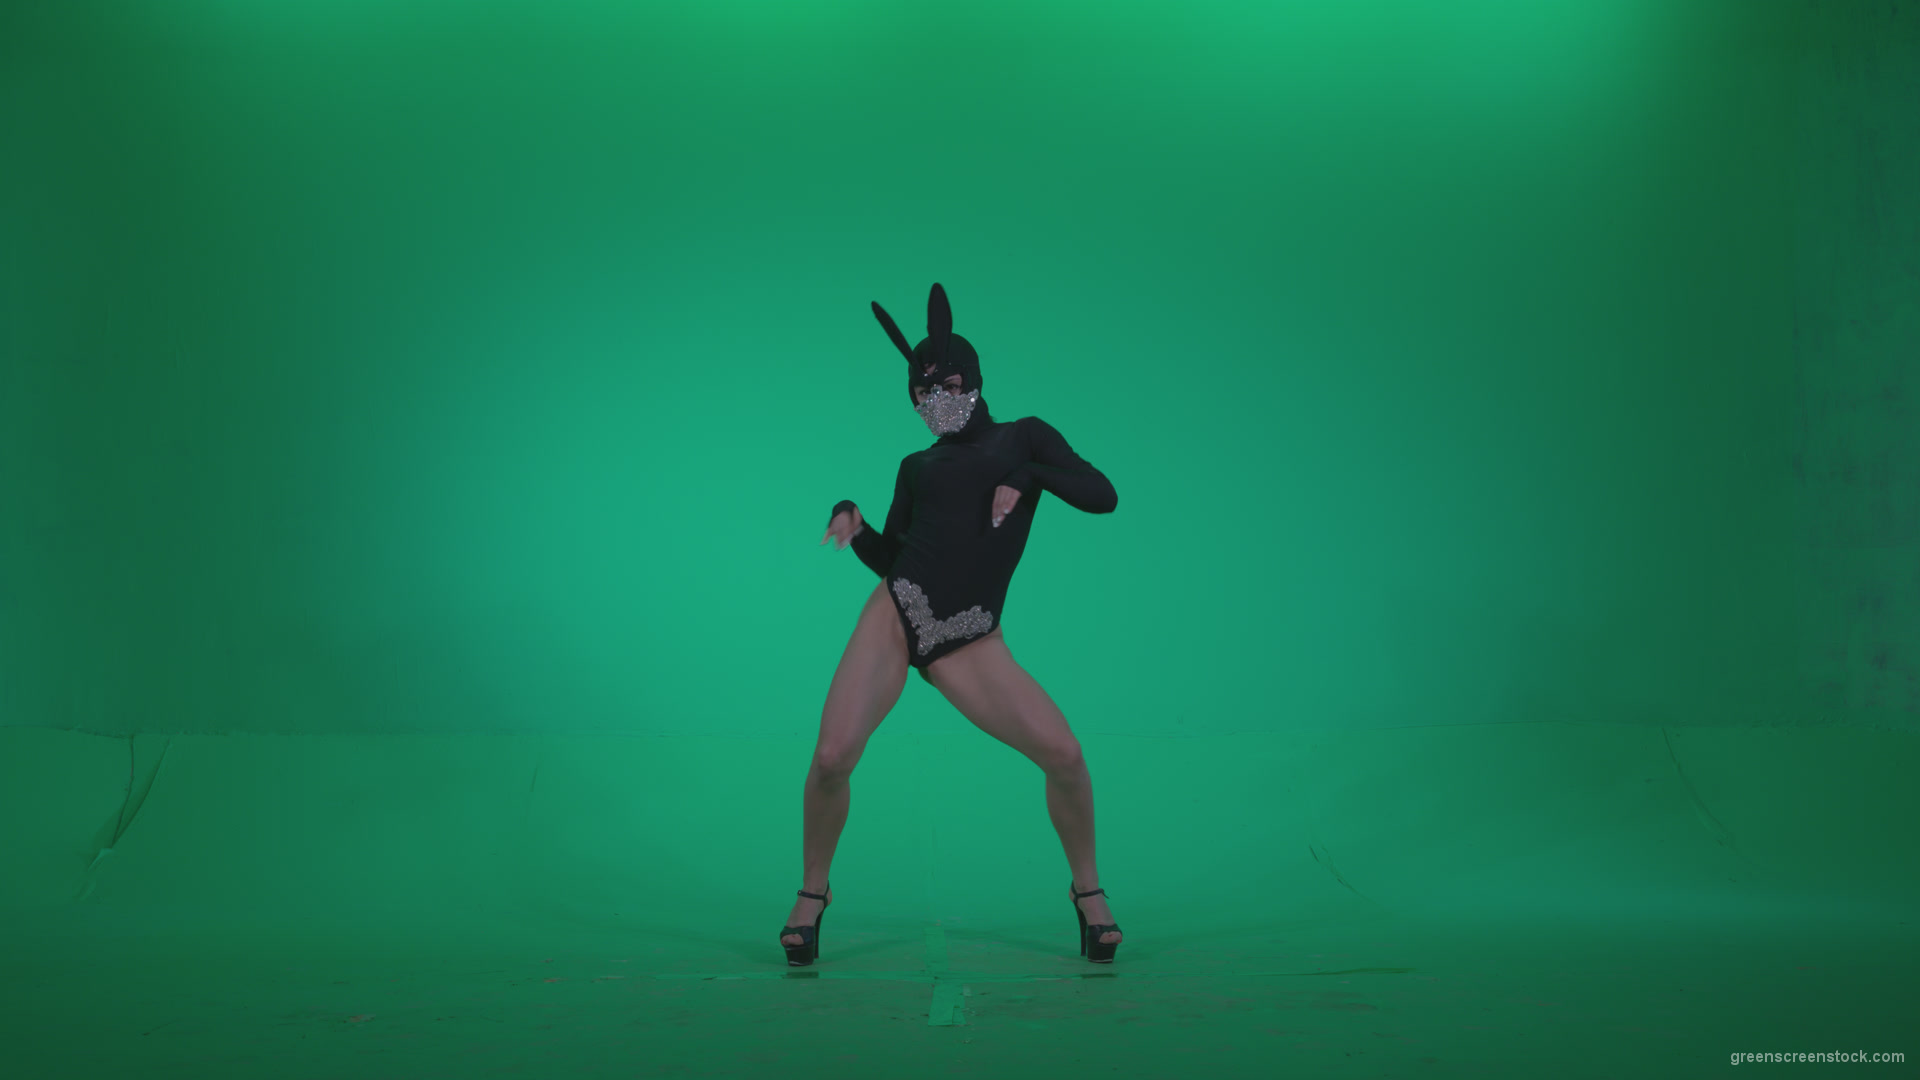 Go-go-Dancer-Black-Rabbit-u8-Green-Screen-Video-Footage_002 Green Screen Stock